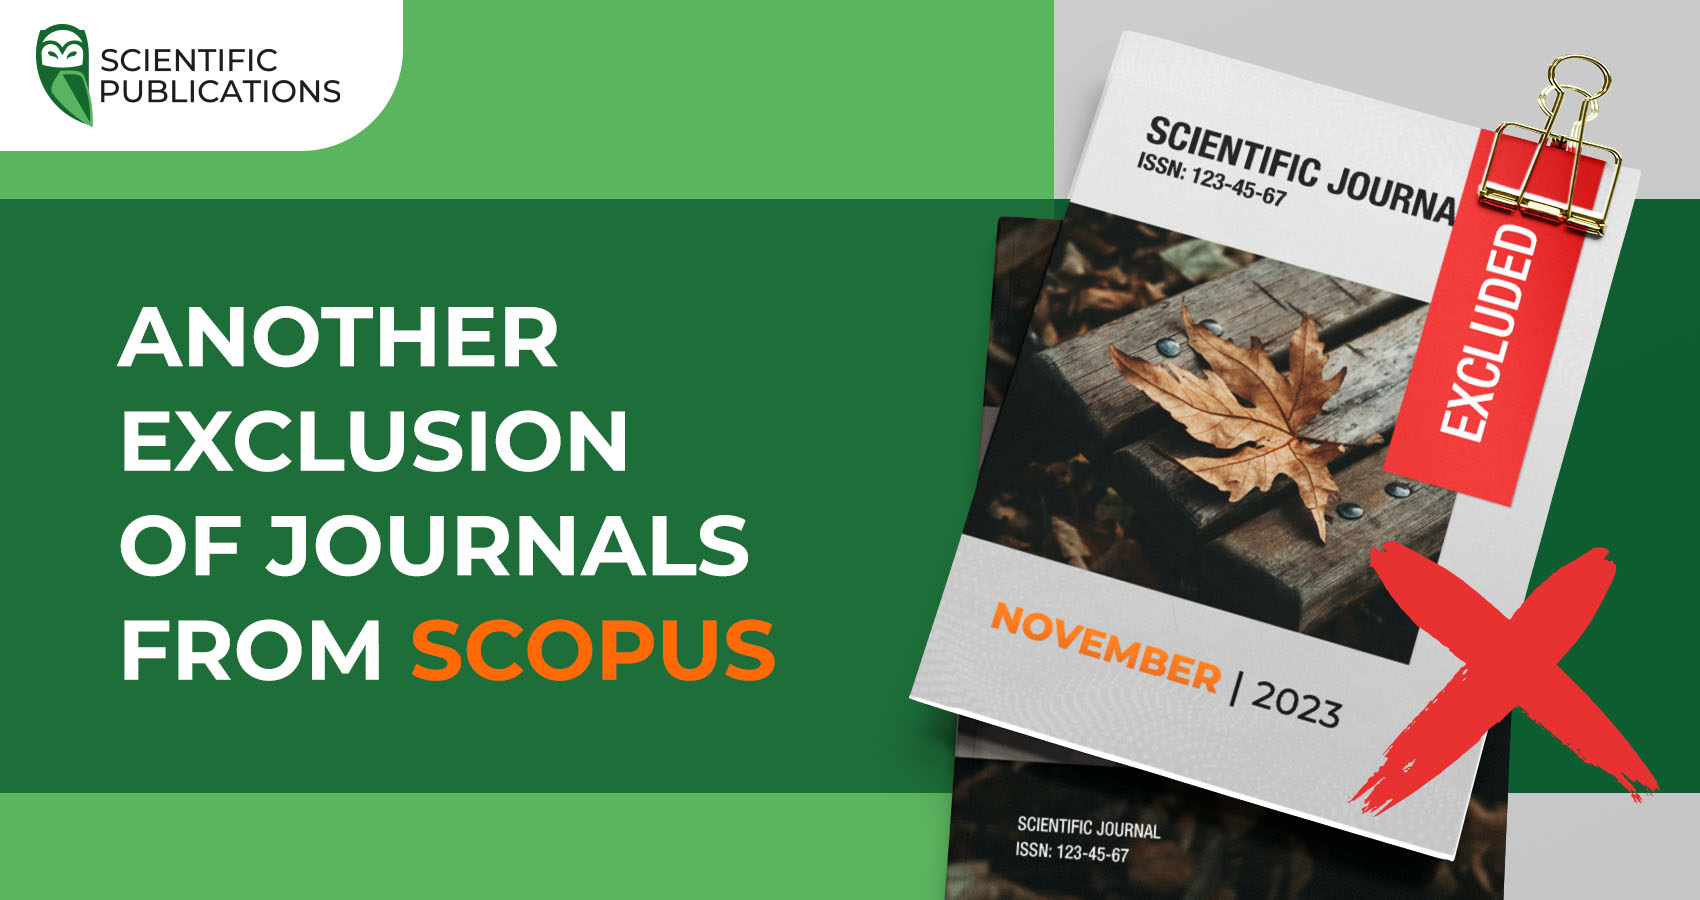 Exclusion of Scopus journals in November 2023